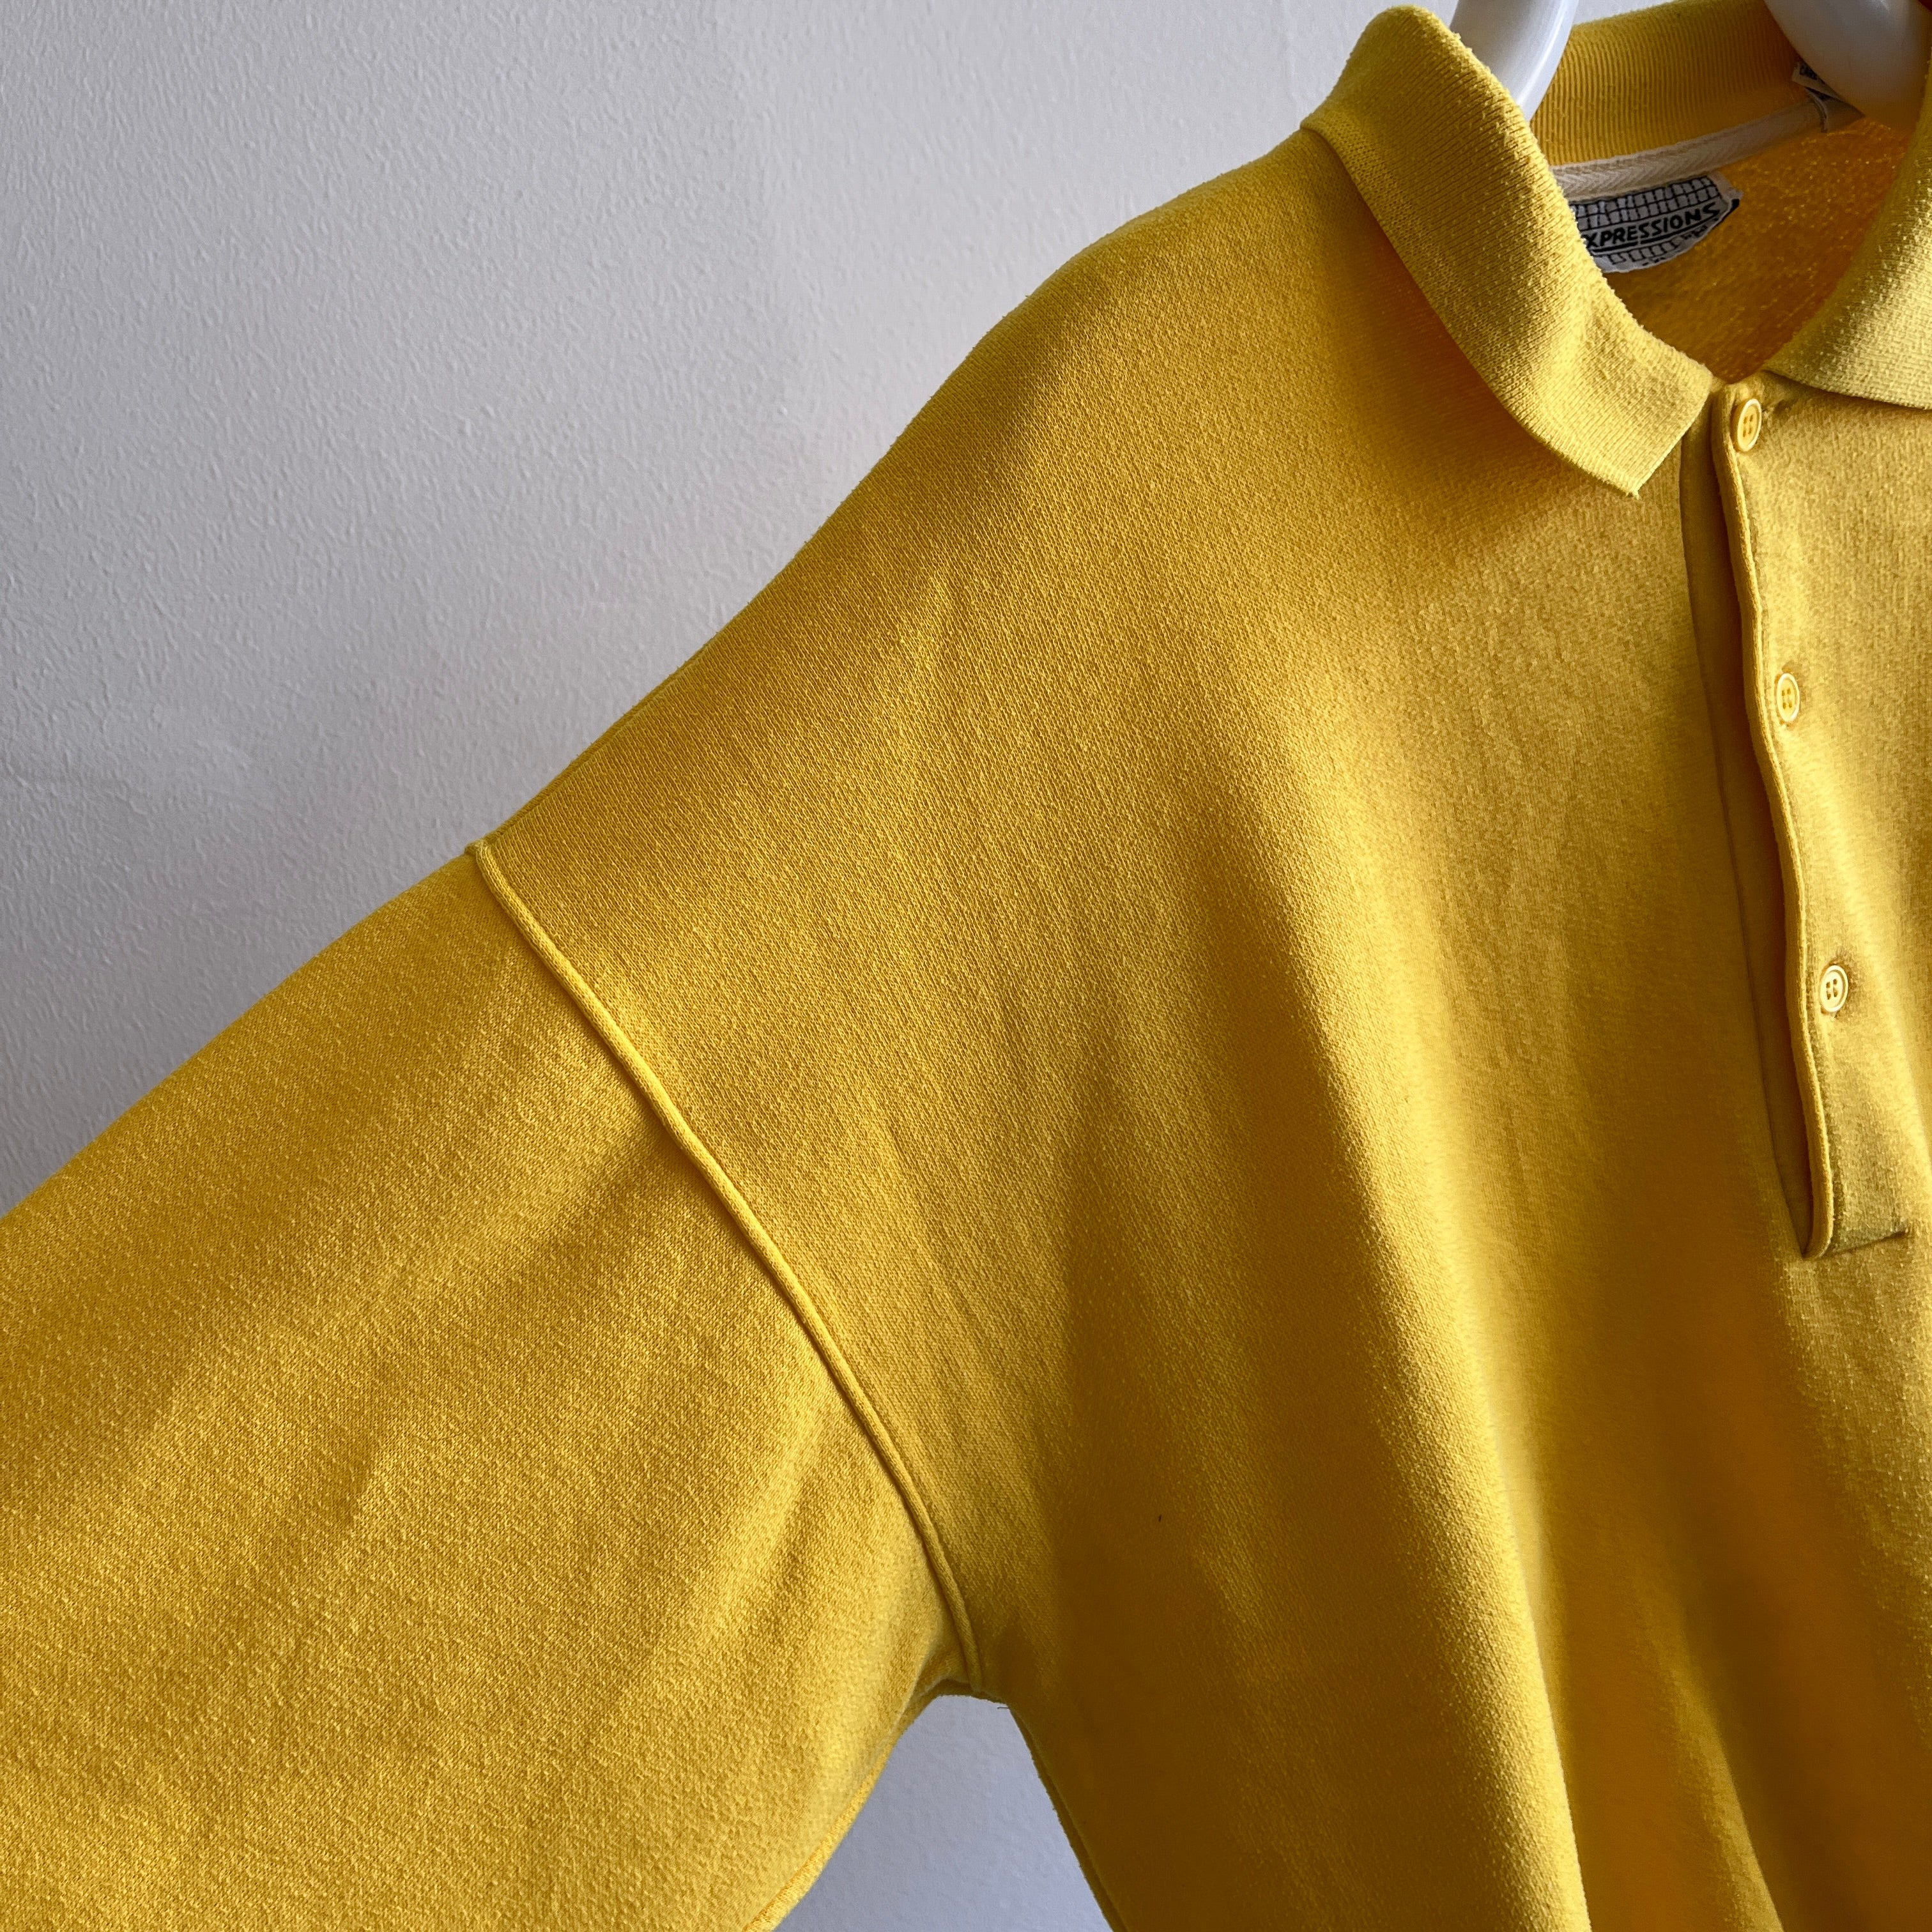 1980s French's Yellow Henley Collared Sweatshirt - So Good!